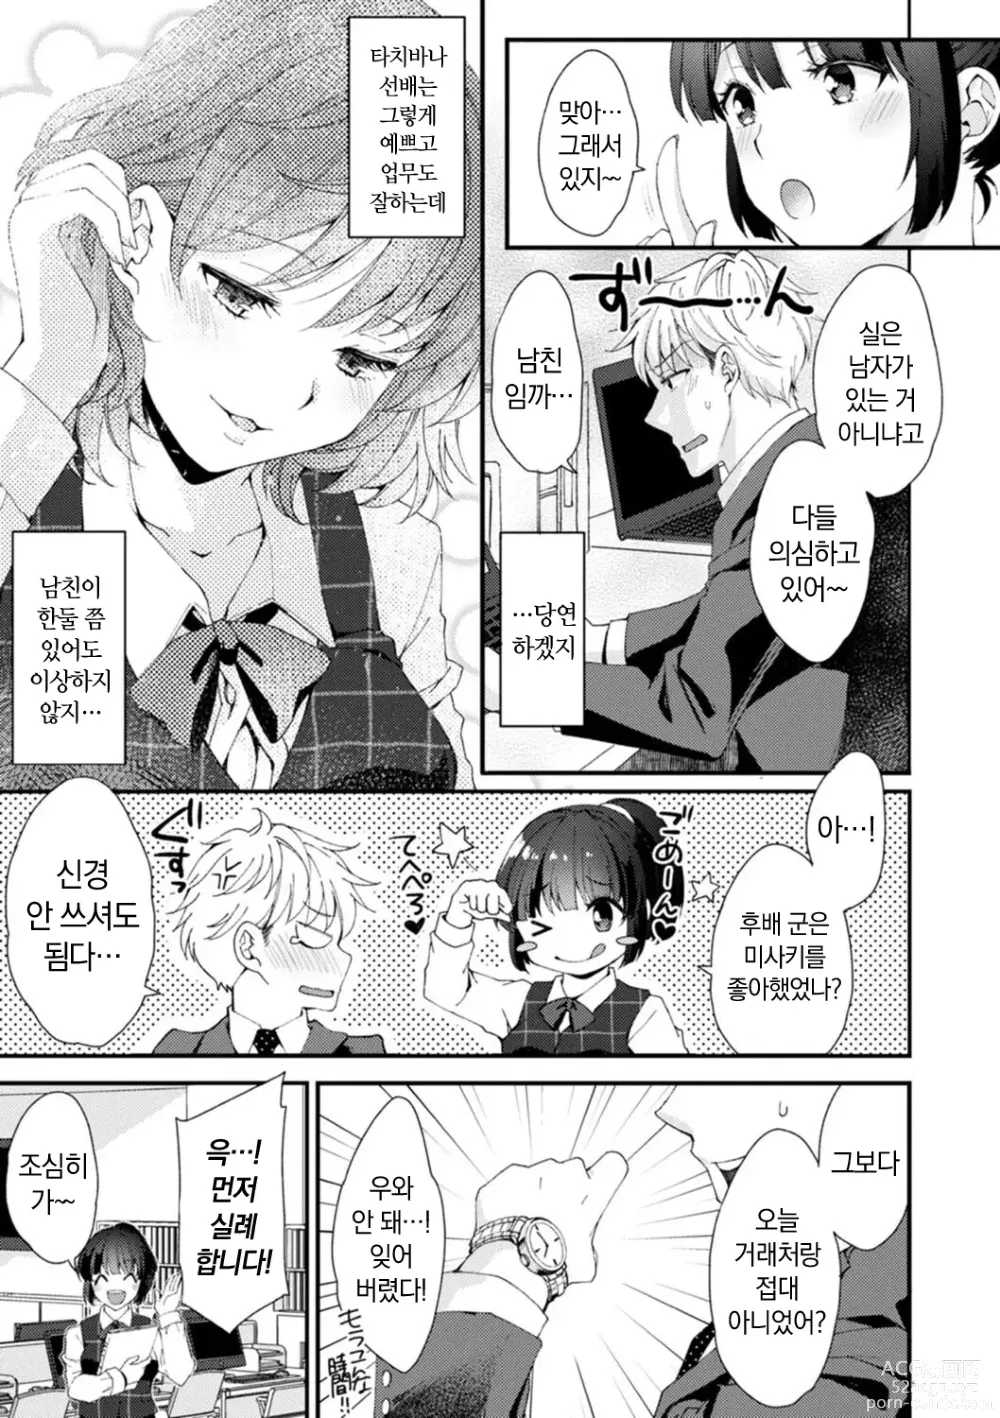 Page 7 of manga 취미가 바니걸이라니 정말이에요?